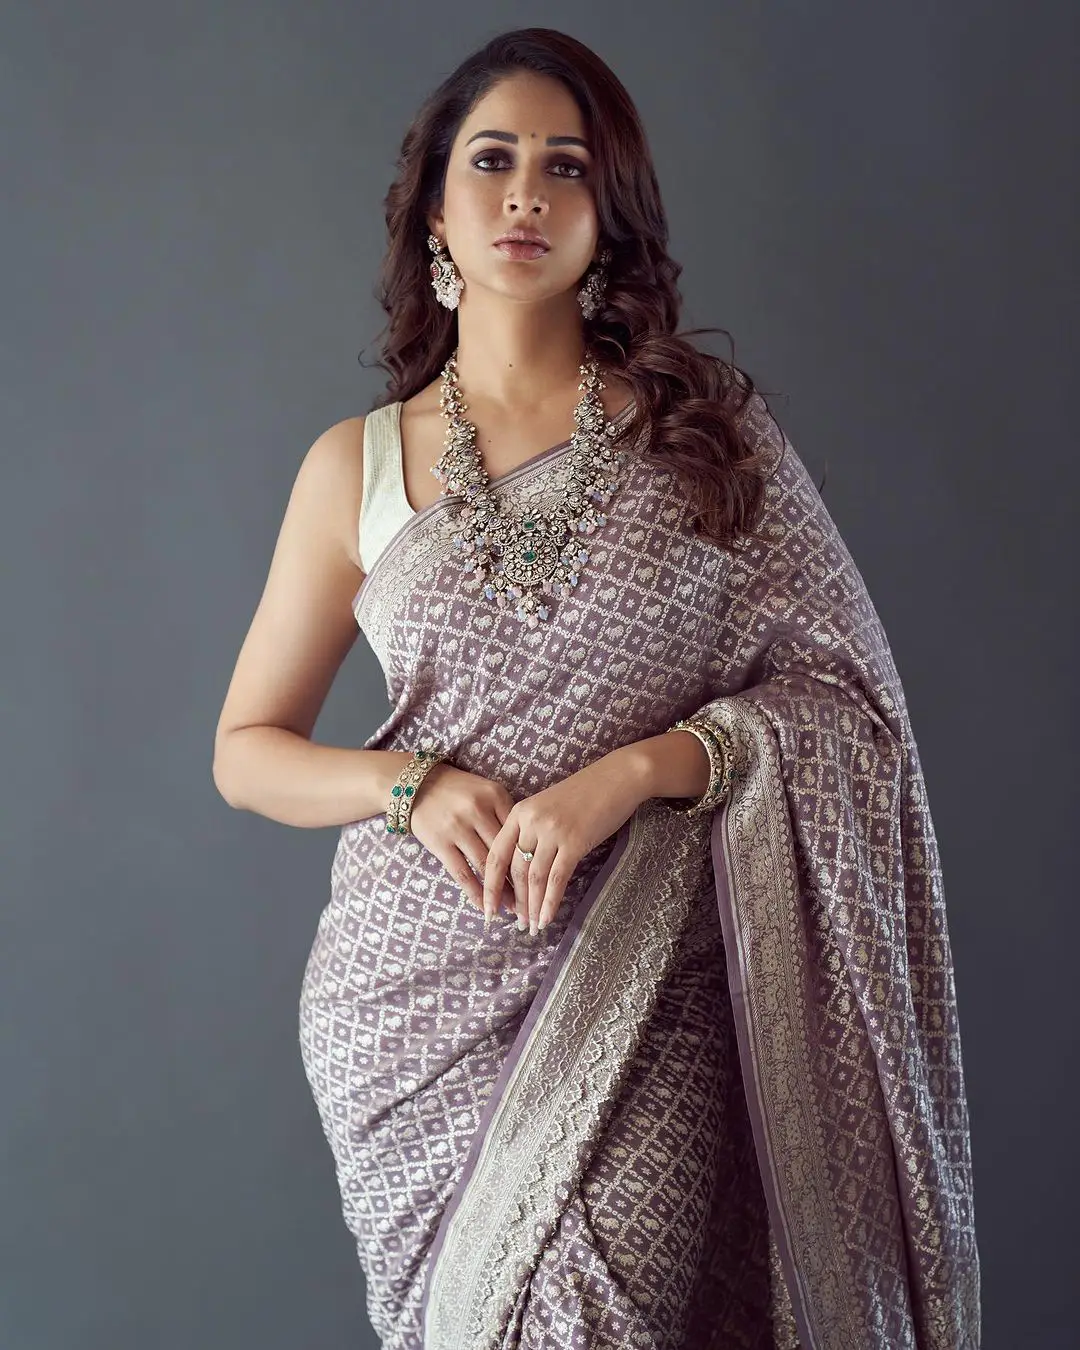 Lavanya tripathi Gorgeous looks in Saree 